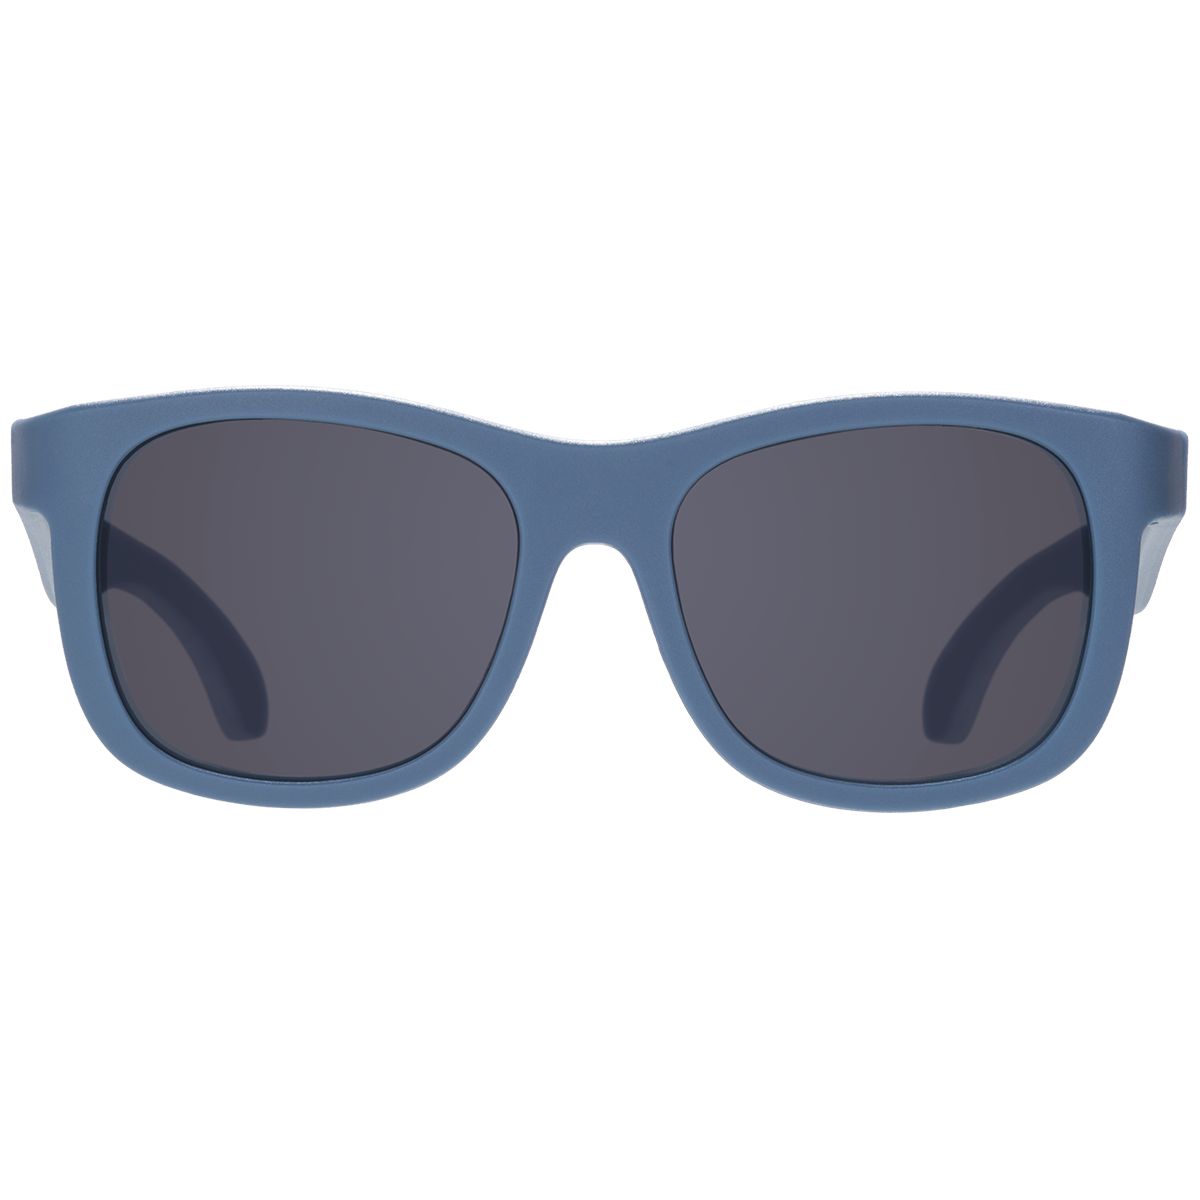 Babiators - Navigator Sunglasses in Pacific Blue: Ages 0-2